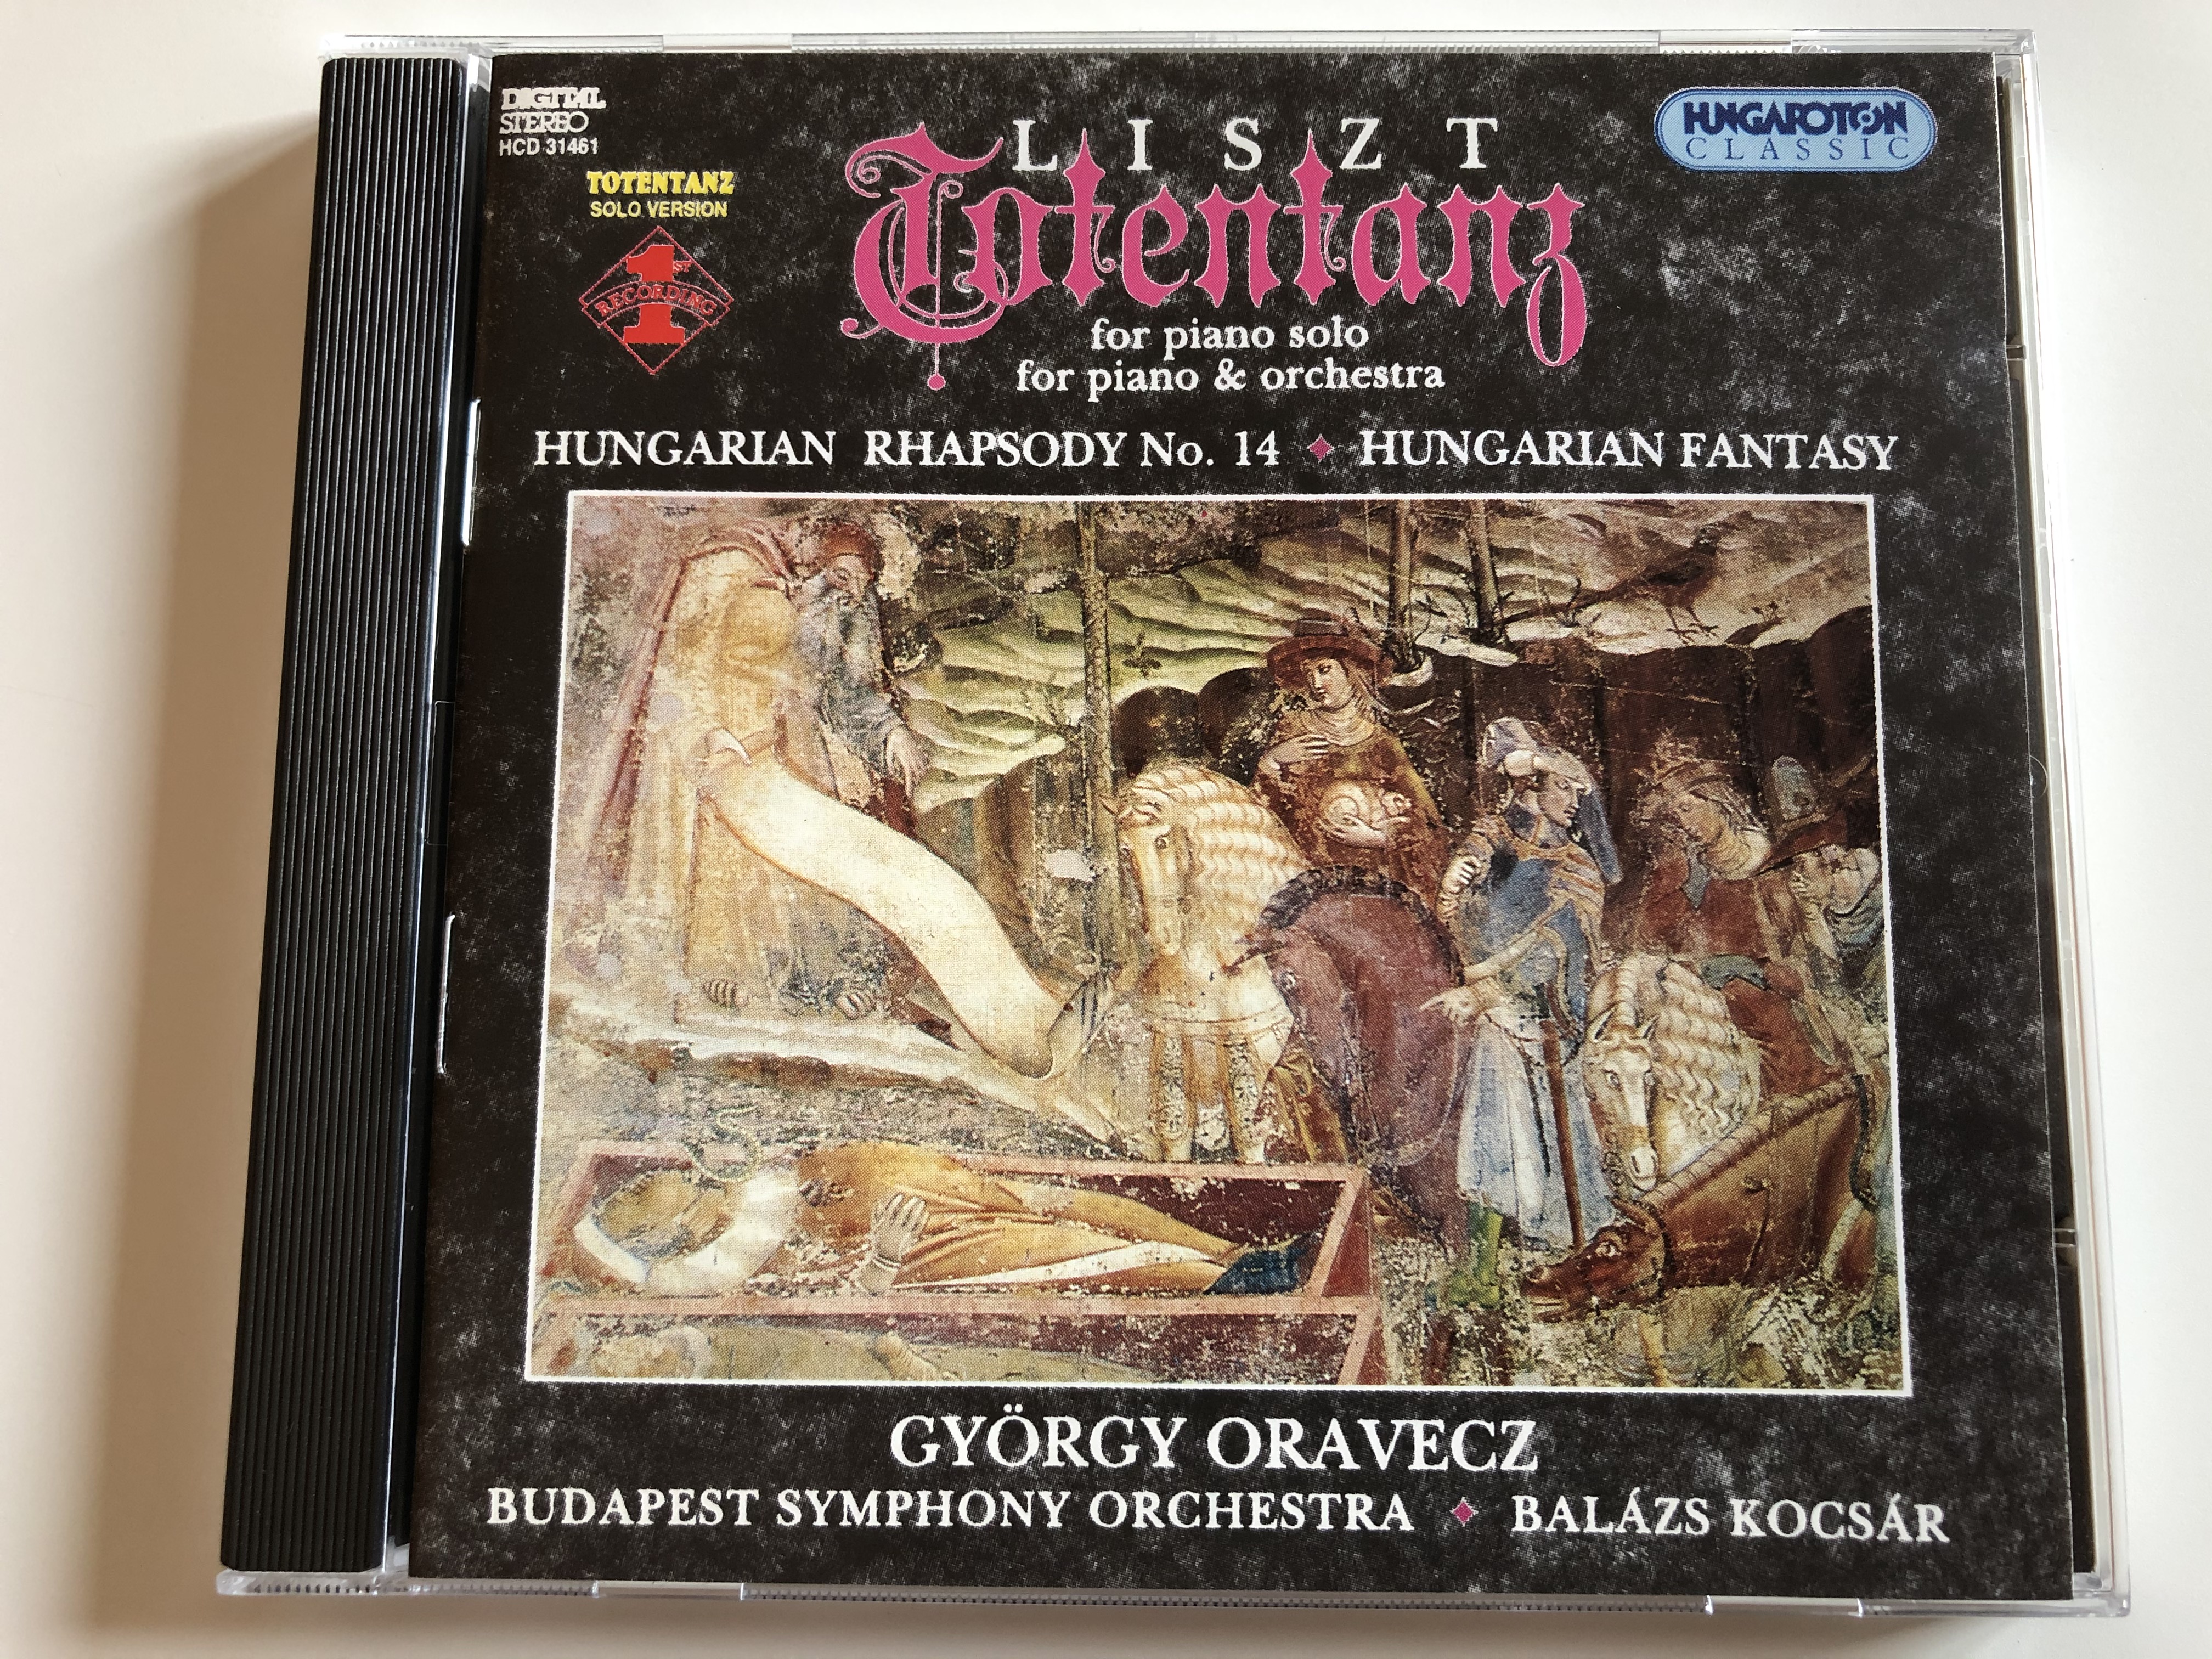 liszt-totentanz-for-pianoo-solo-for-piano-orchestra-hungarian-rhapsody-no.-14-hungarian-fantasy-gyorgy-oravecz-budapest-symphony-orchestra-balazs-kocsar-hungaroton-classic-audio-cd-1995-1-.jpg